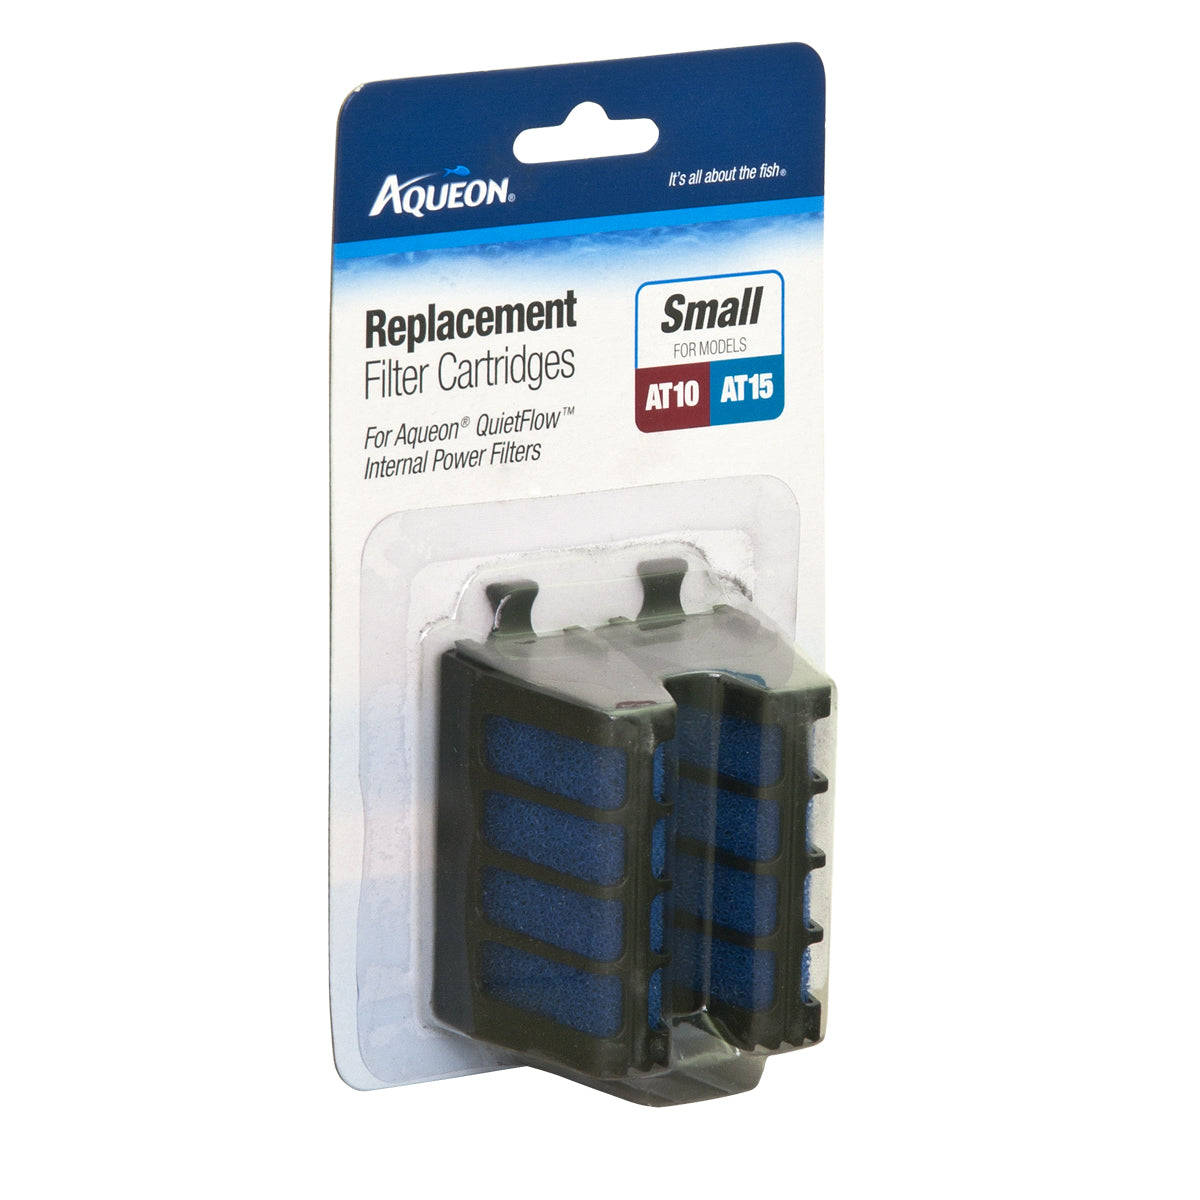 Aqueon Replacement Filter Cartridge QuietFlow Internal Power Filter Mini-Small - 2pk